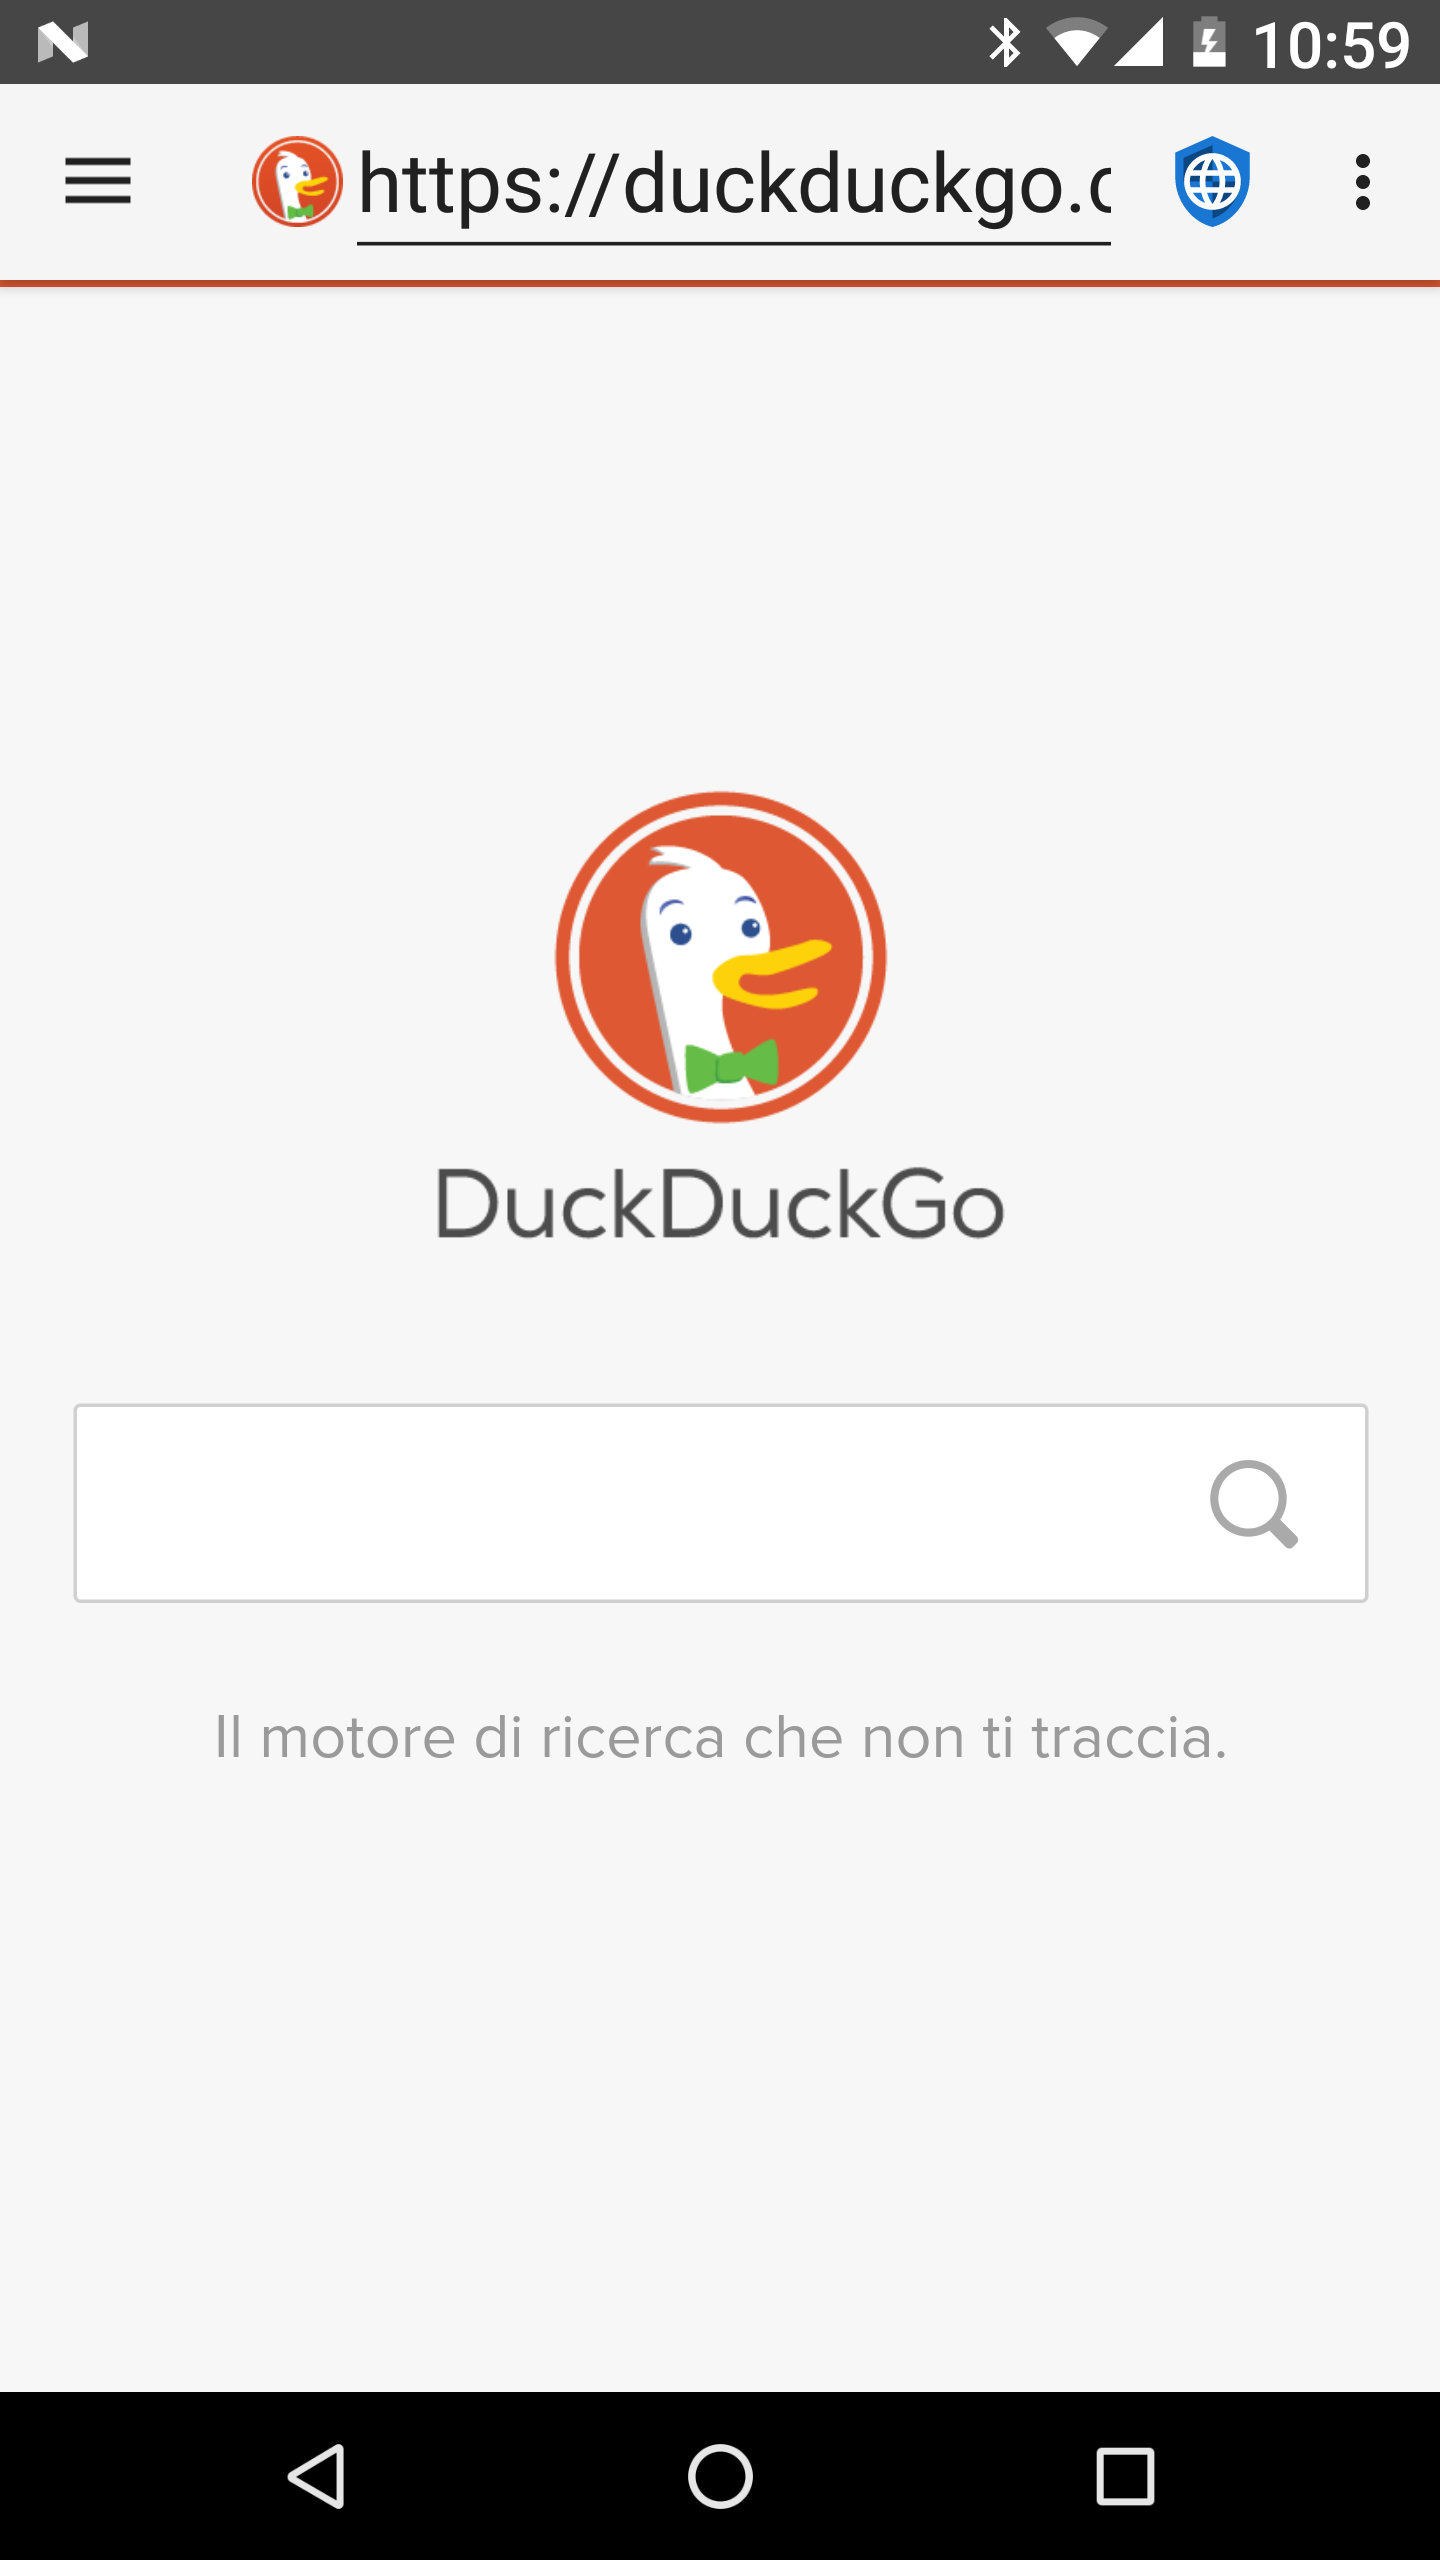 fastlane/metadata/android/it/phoneScreenshots/01 - Duck Duck Go - it.png